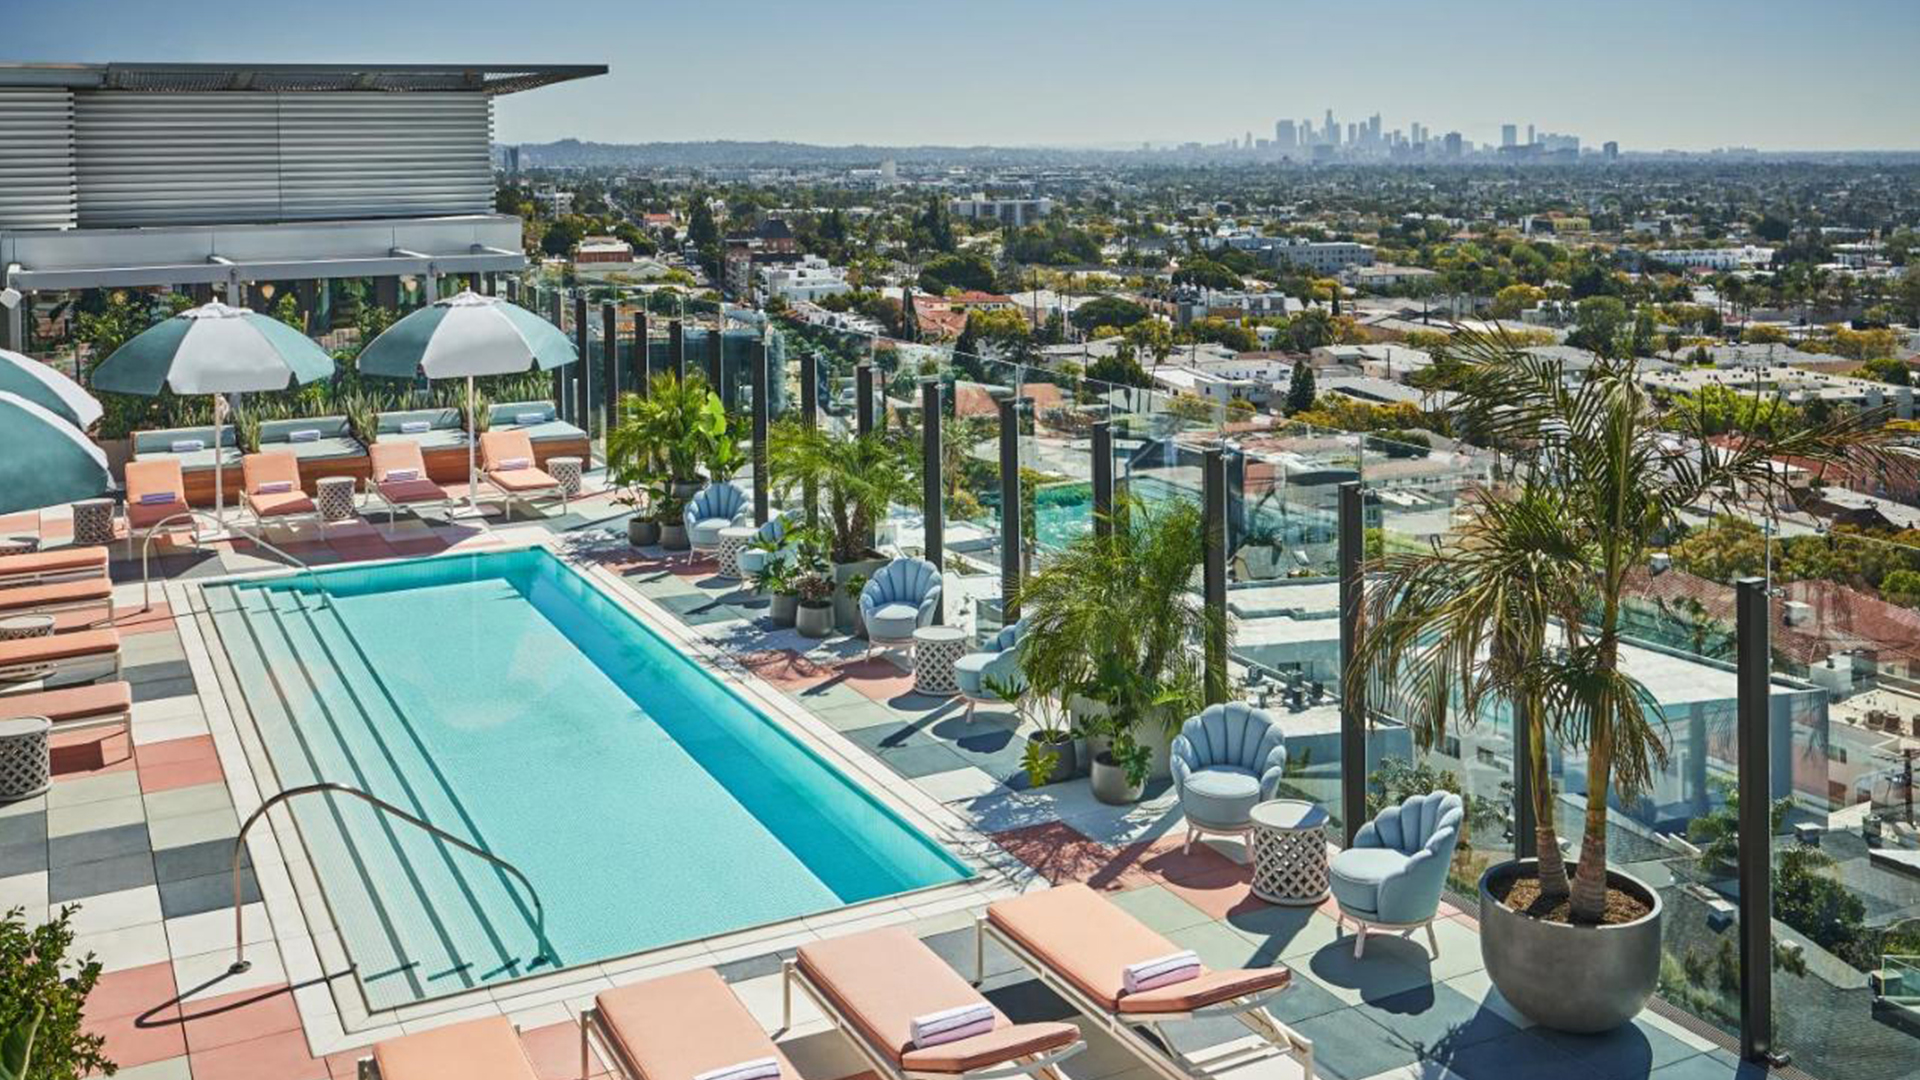 Pendry West Hollywood aerial of pool